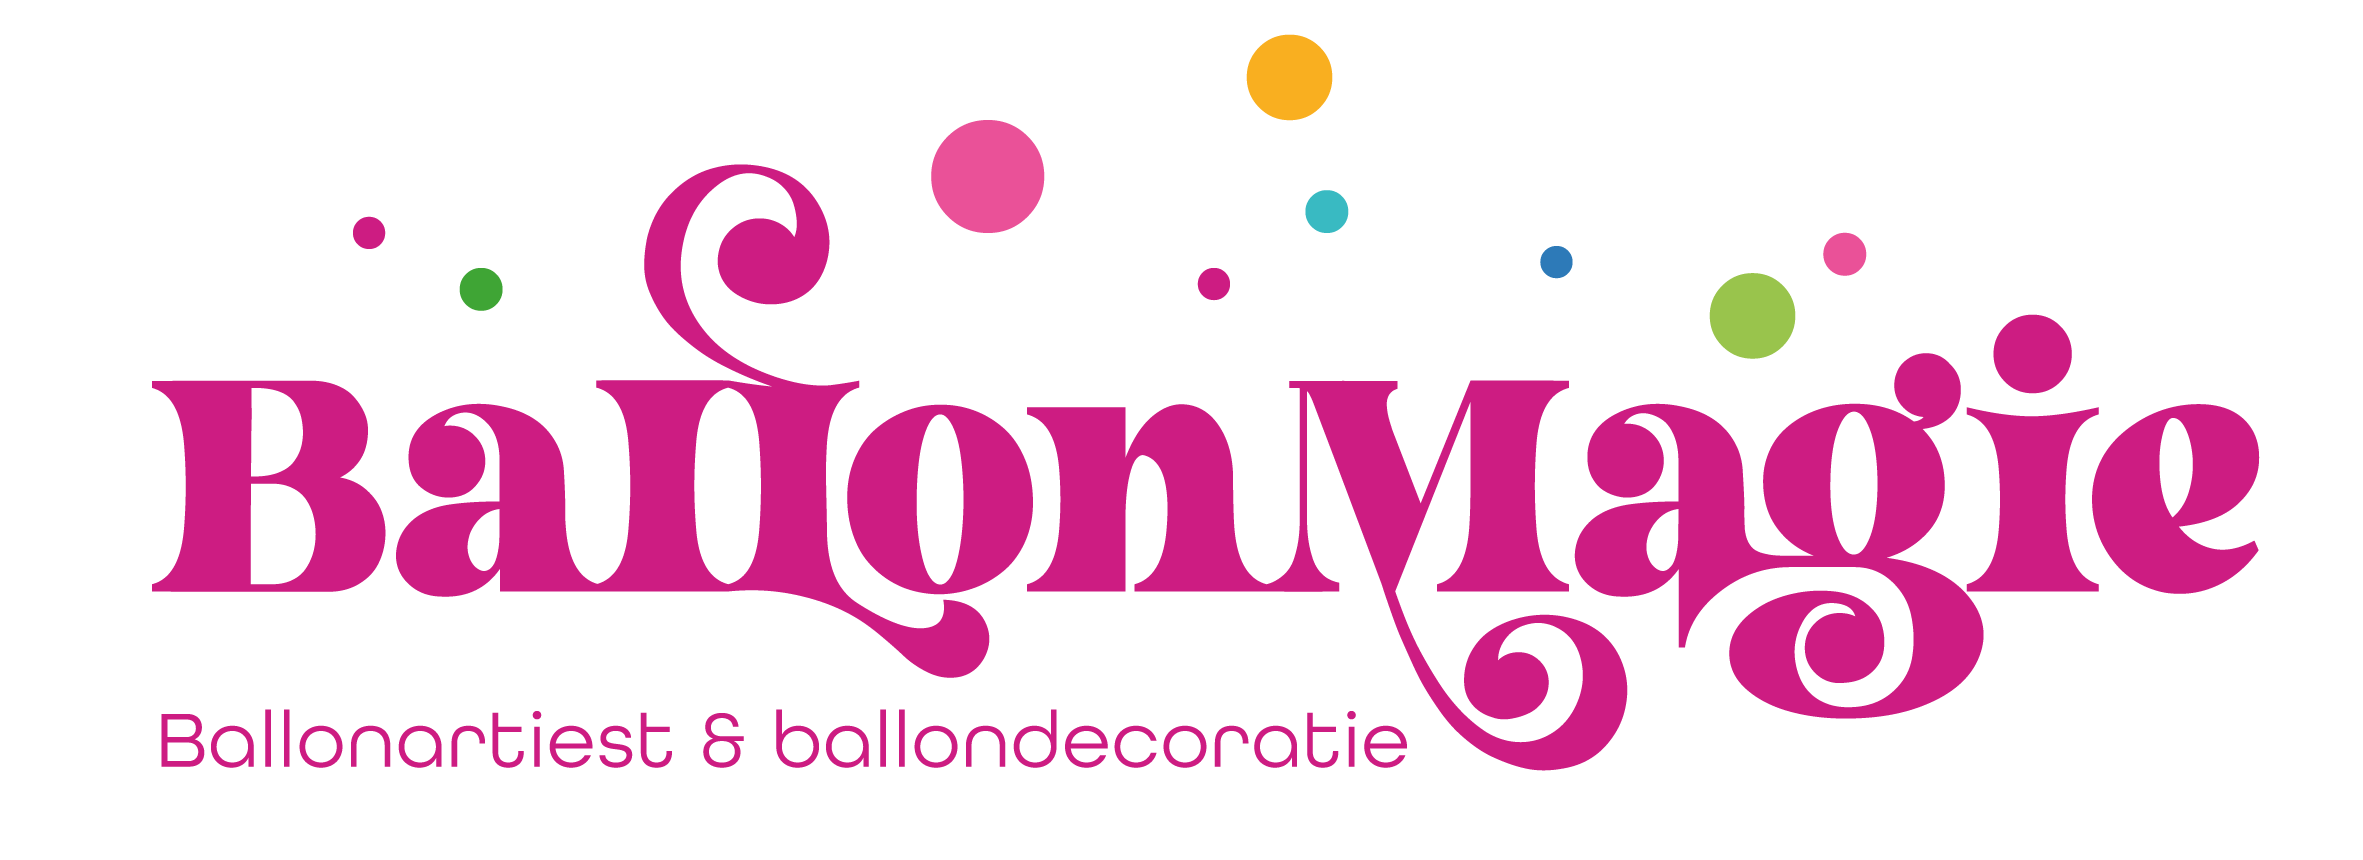 Ballonmagie